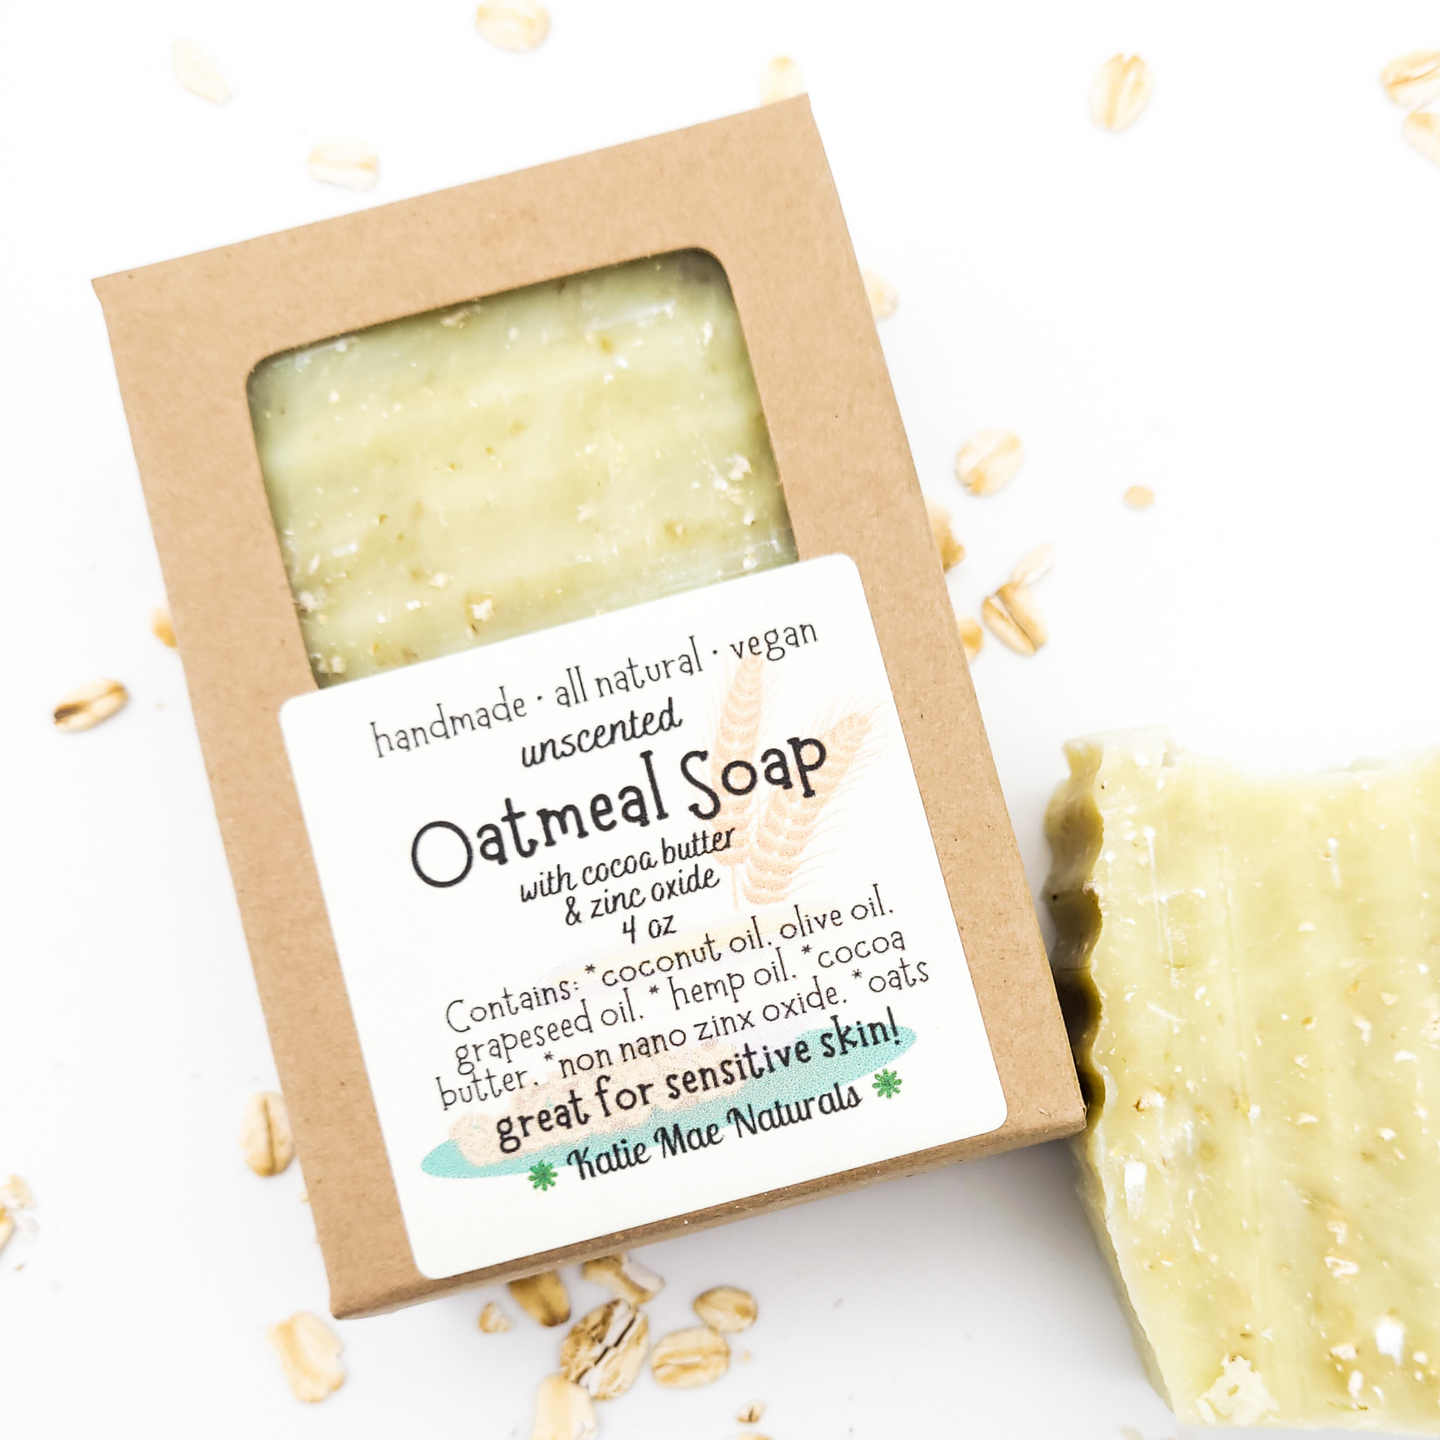 Vegan oatmeal soap for sensitive skin 